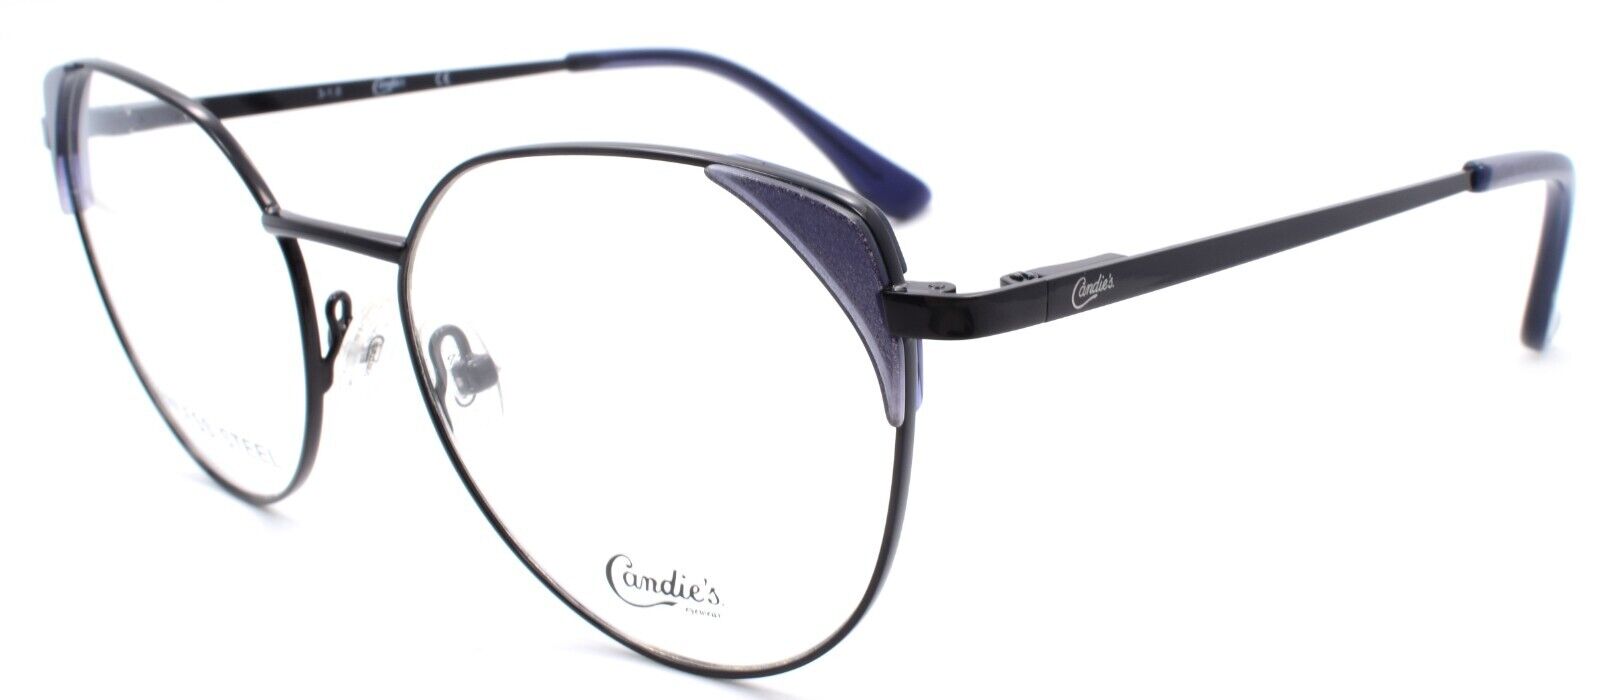 1-Candies CA0181 001 Women's Eyeglasses Frames 52-17-140 Shiny Black-889214119827-IKSpecs